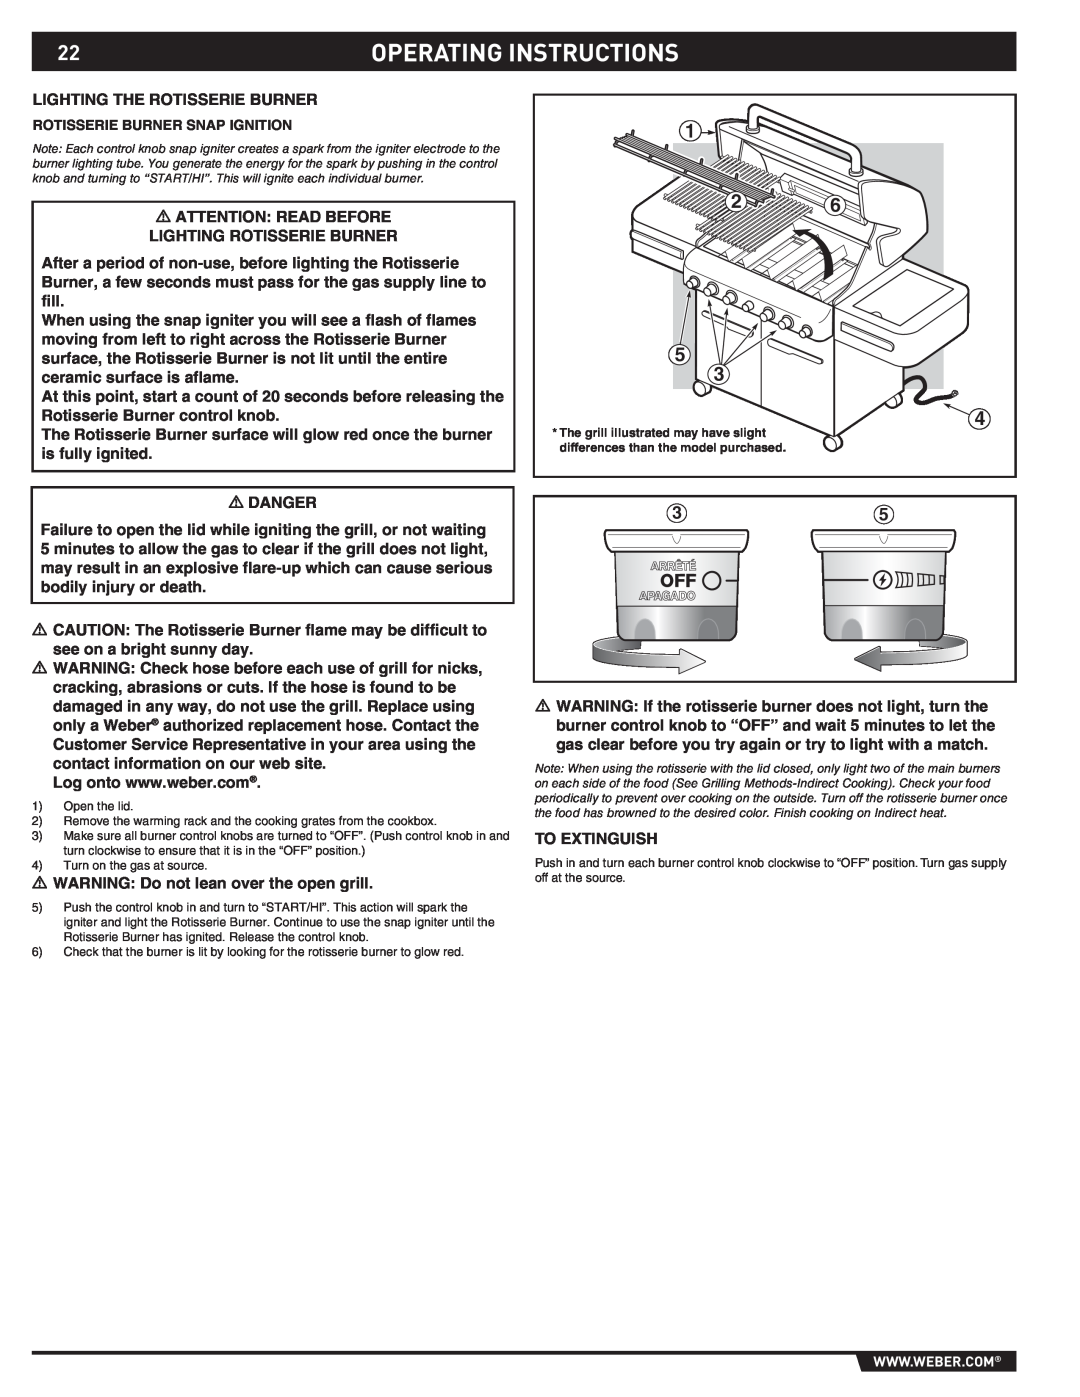 Weber S-470TM manual Operating Instructions, Rotisserie Burner Snap Ignition 